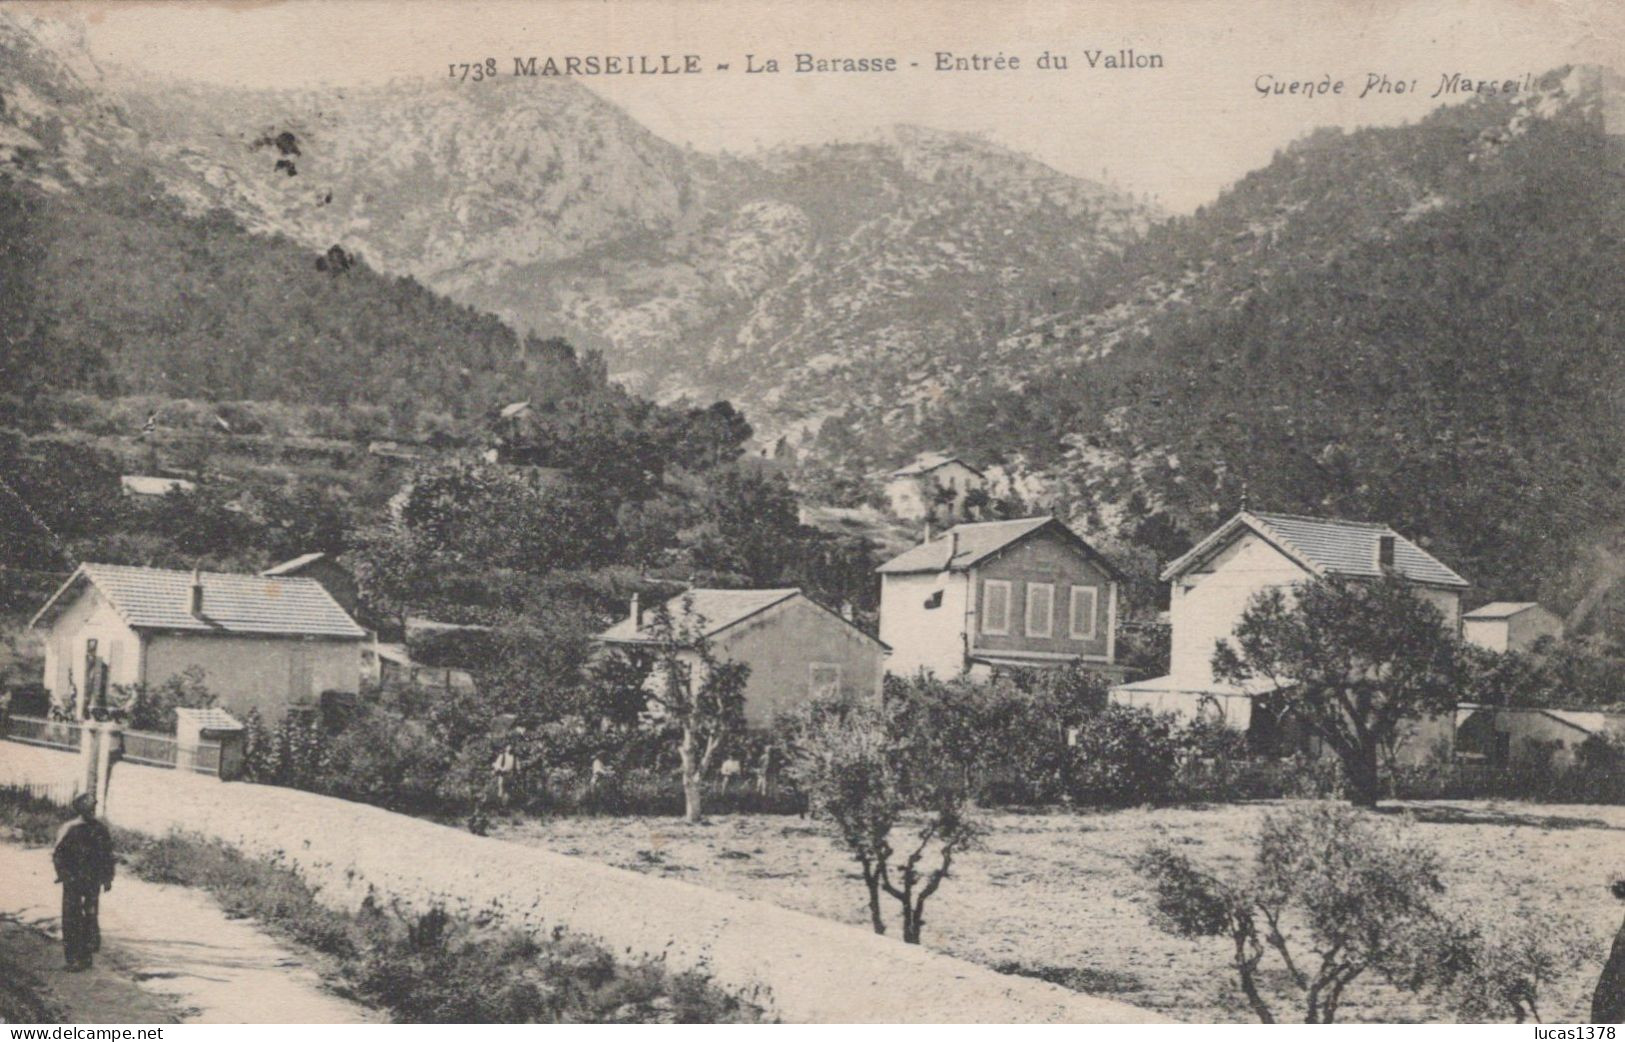 13 / MARSEILLE / LA BARASSE / LA BARASSE / ENTREE DU VALLON / GUENDE 1738 - Saint Marcel, La Barasse, St Menet